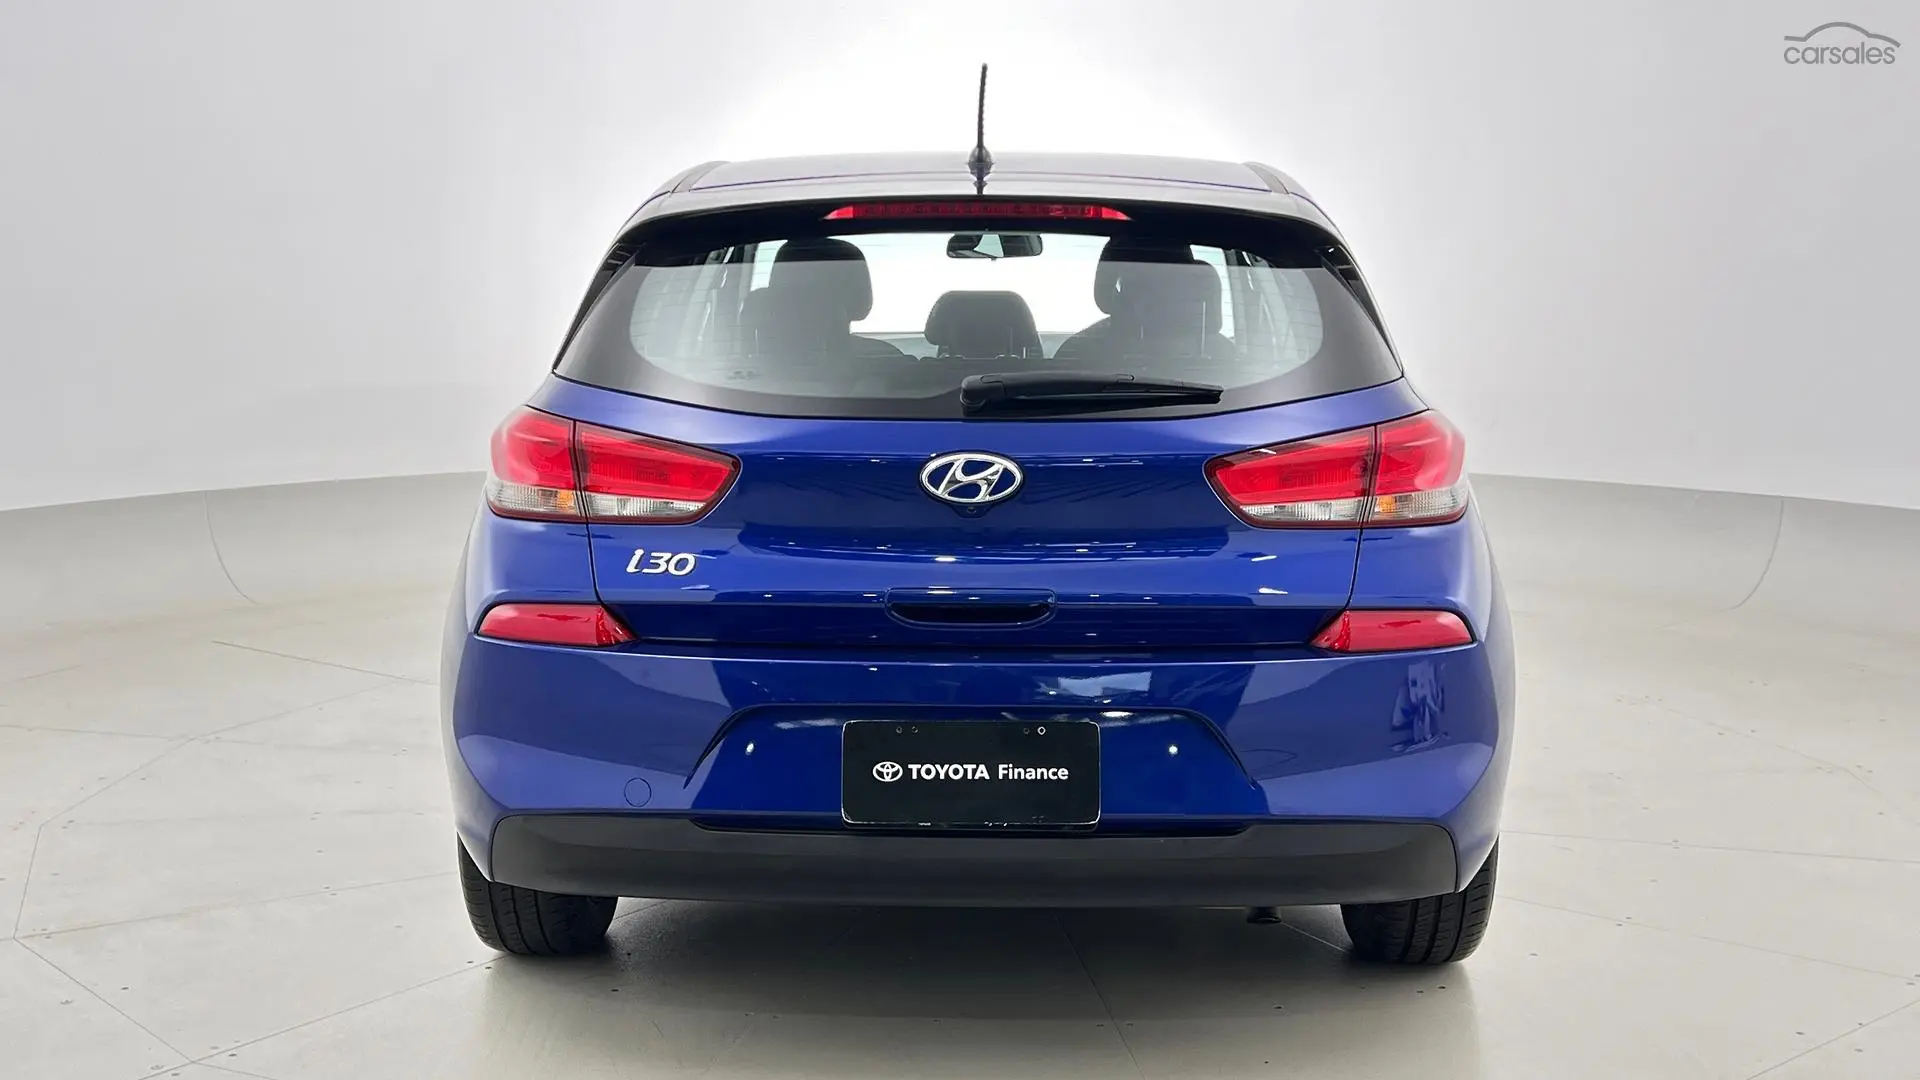 2019 Hyundai i30 Image 6